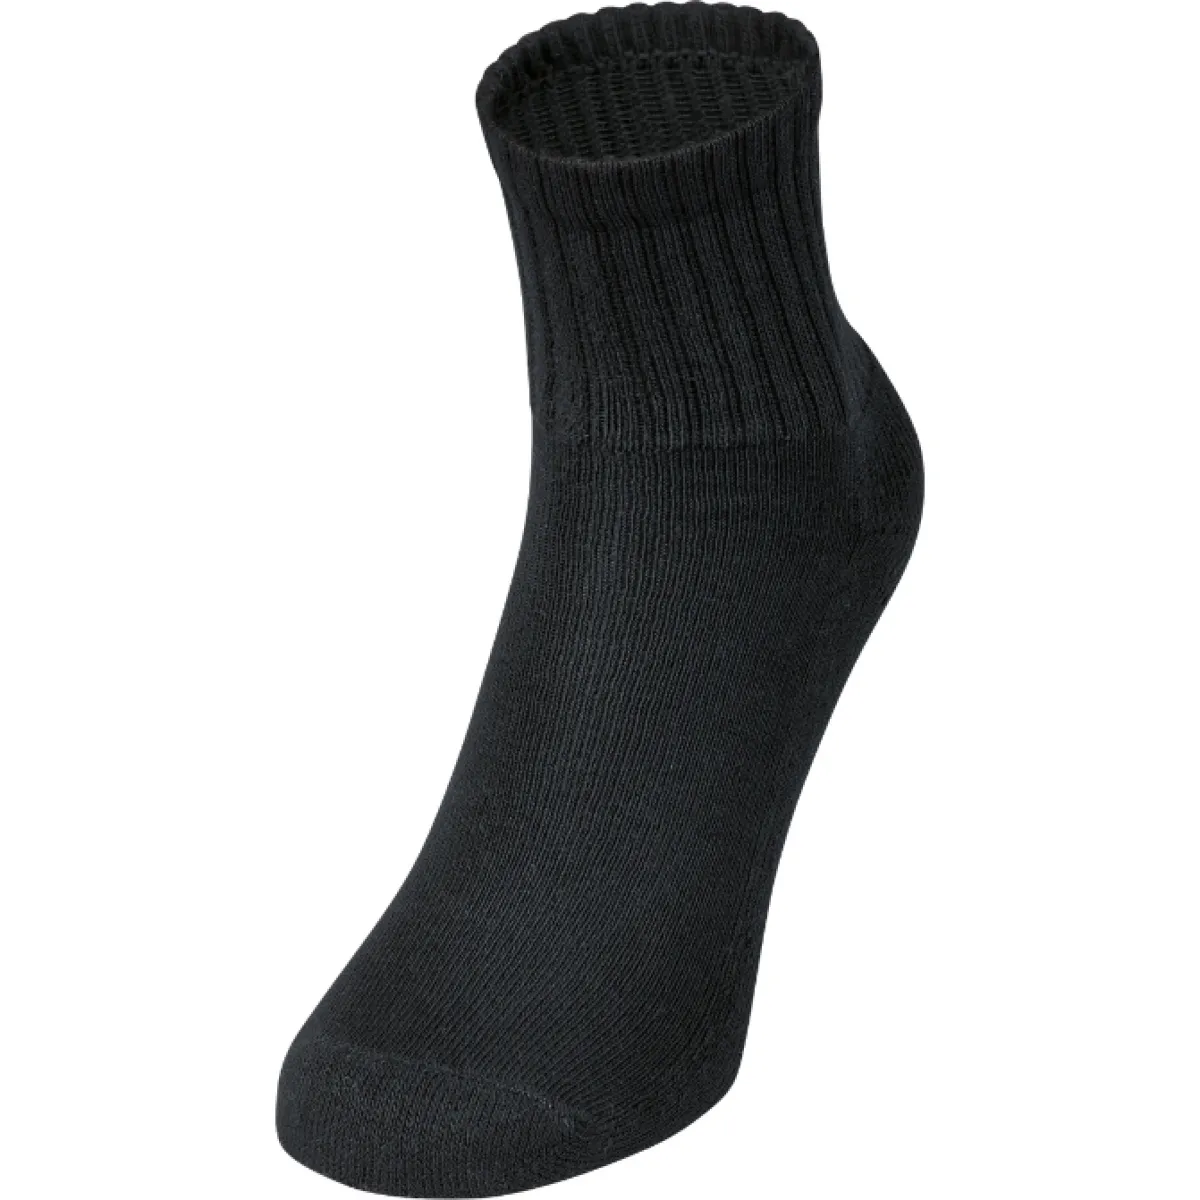 Jako sports socks black